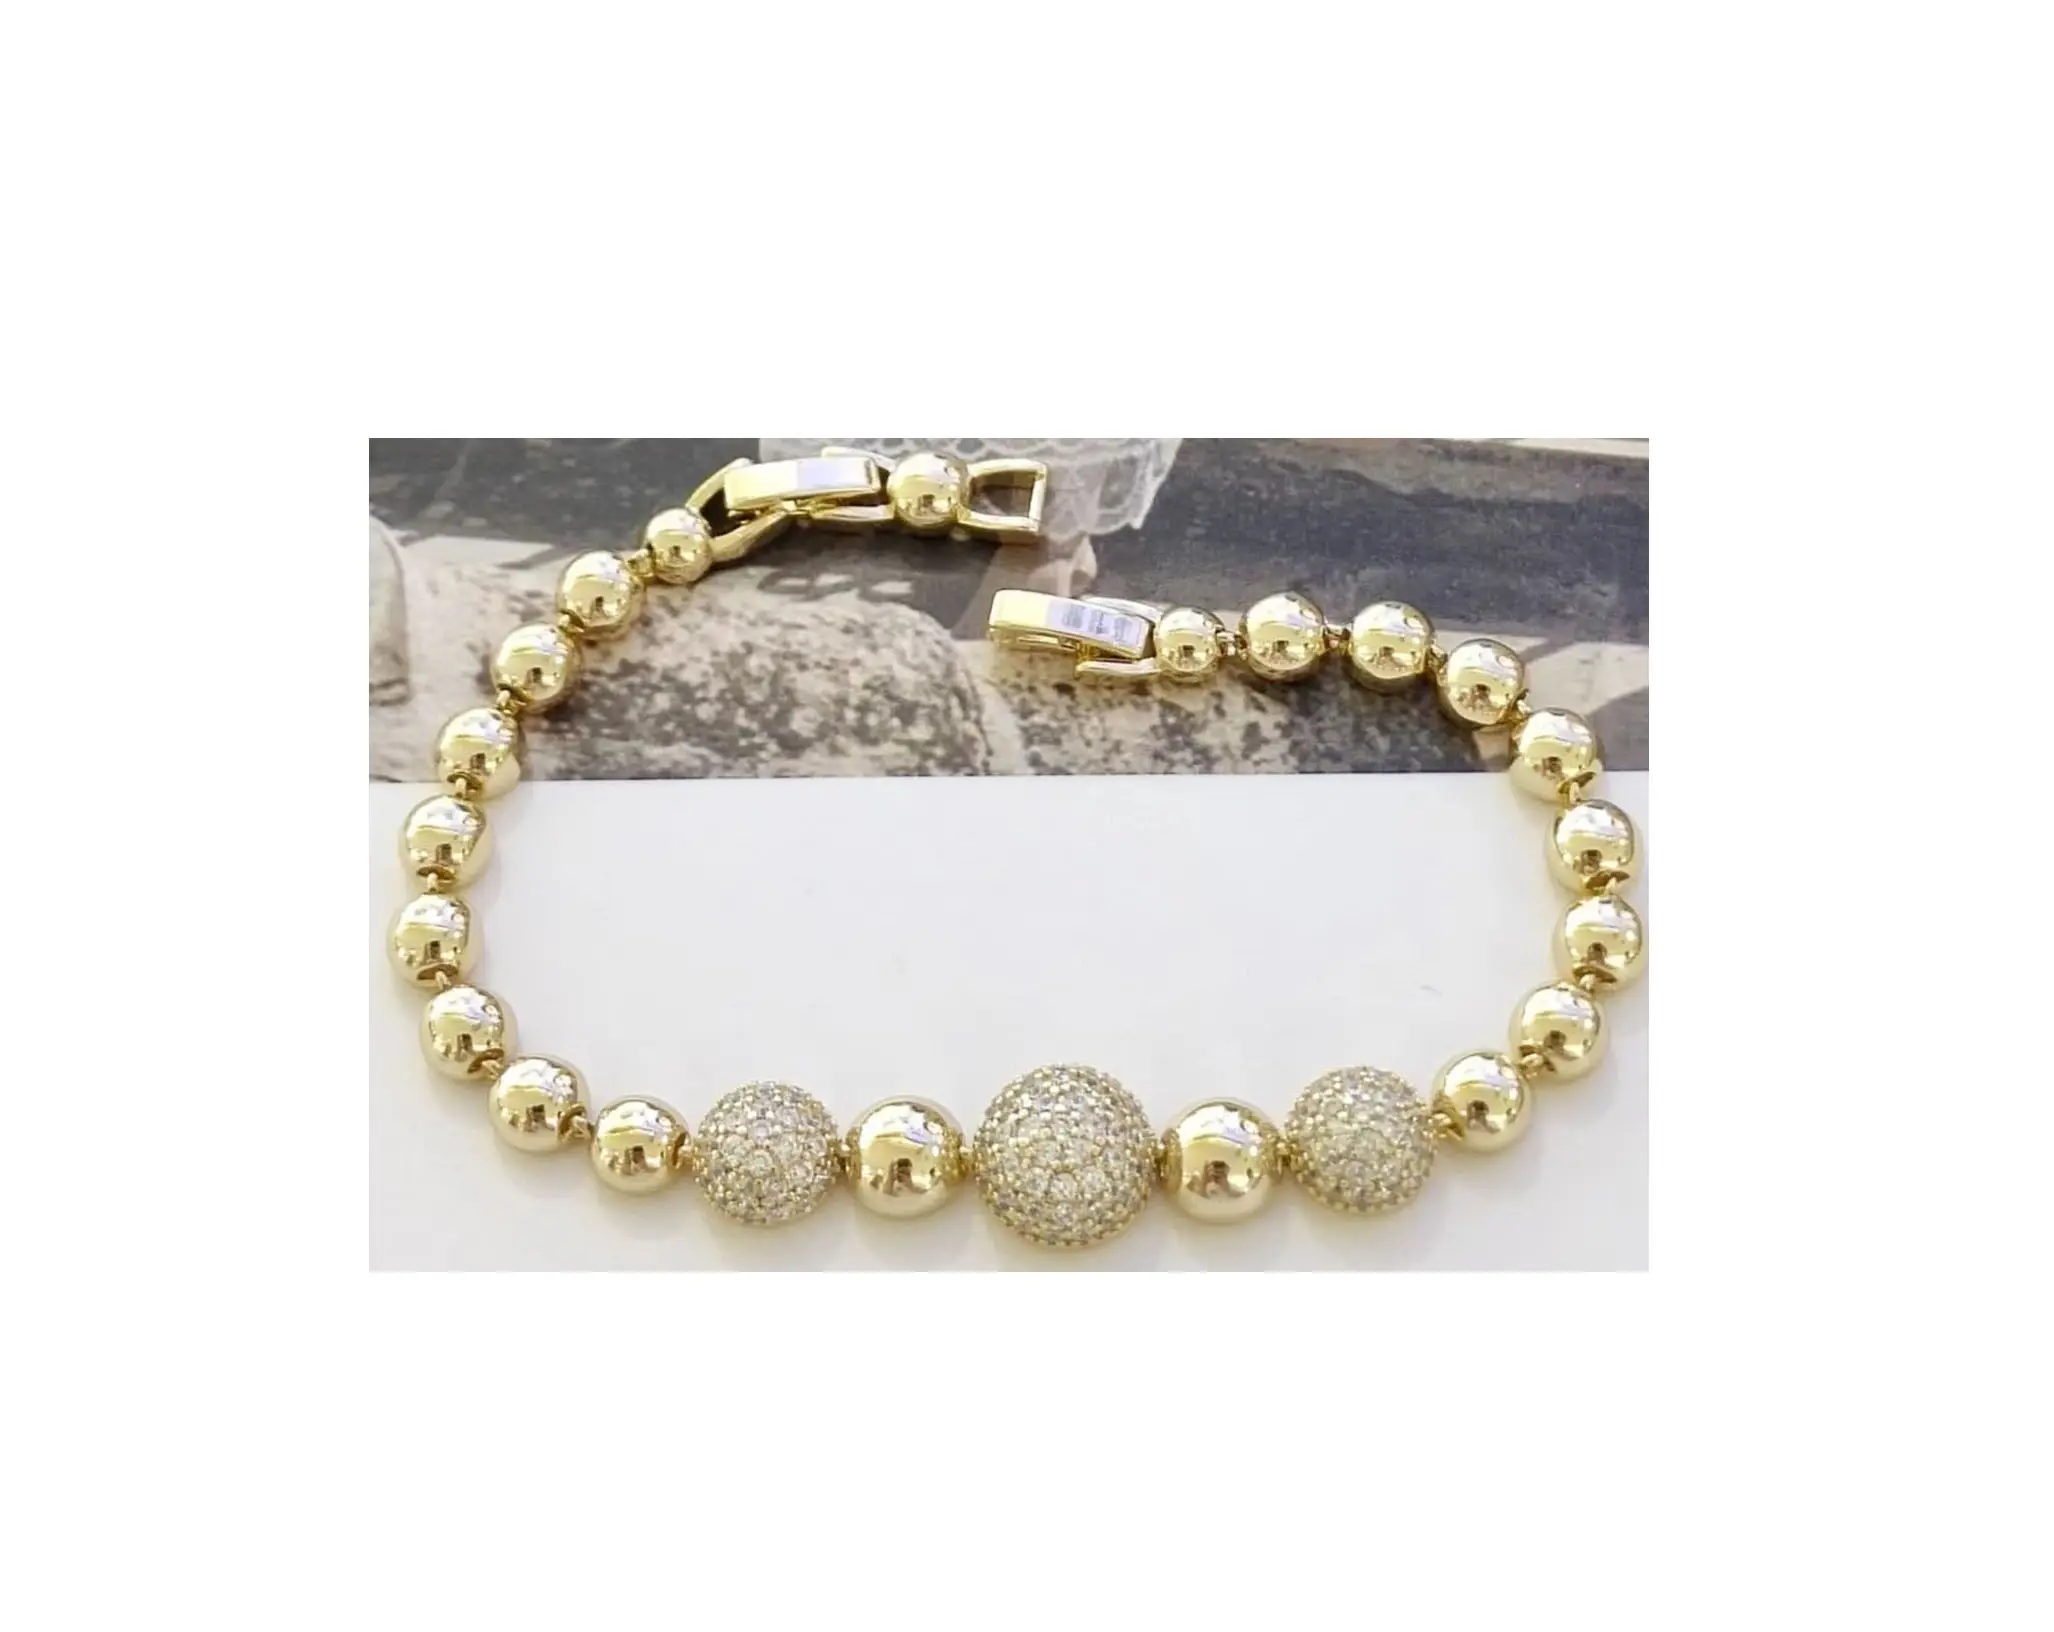 Yiwu joias banhadas a ouro 14k, joias simples, diamante, amuleto ajustável, tamanho